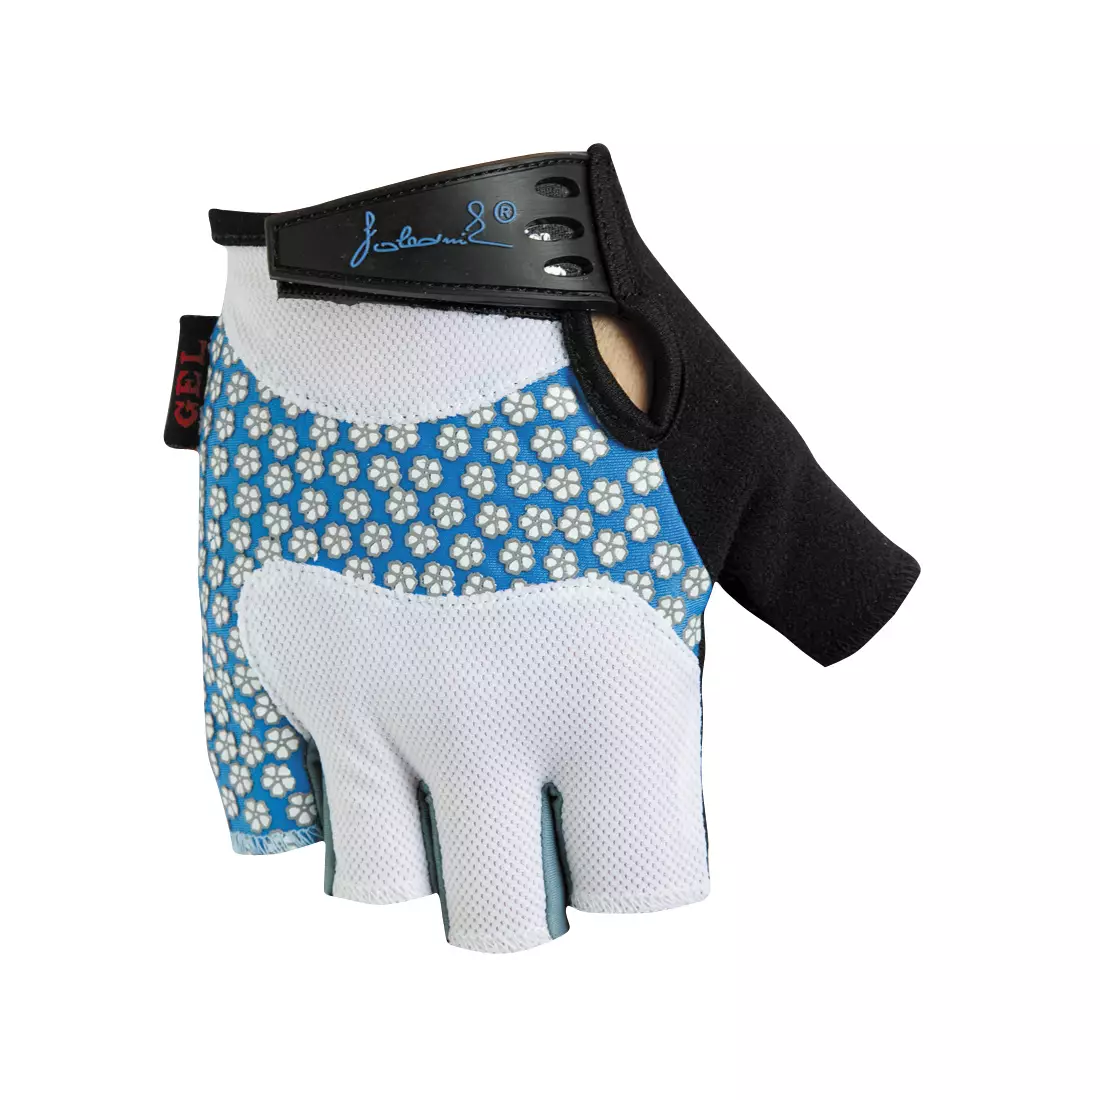 POLEDNIK EVA NEW women's cycling gloves